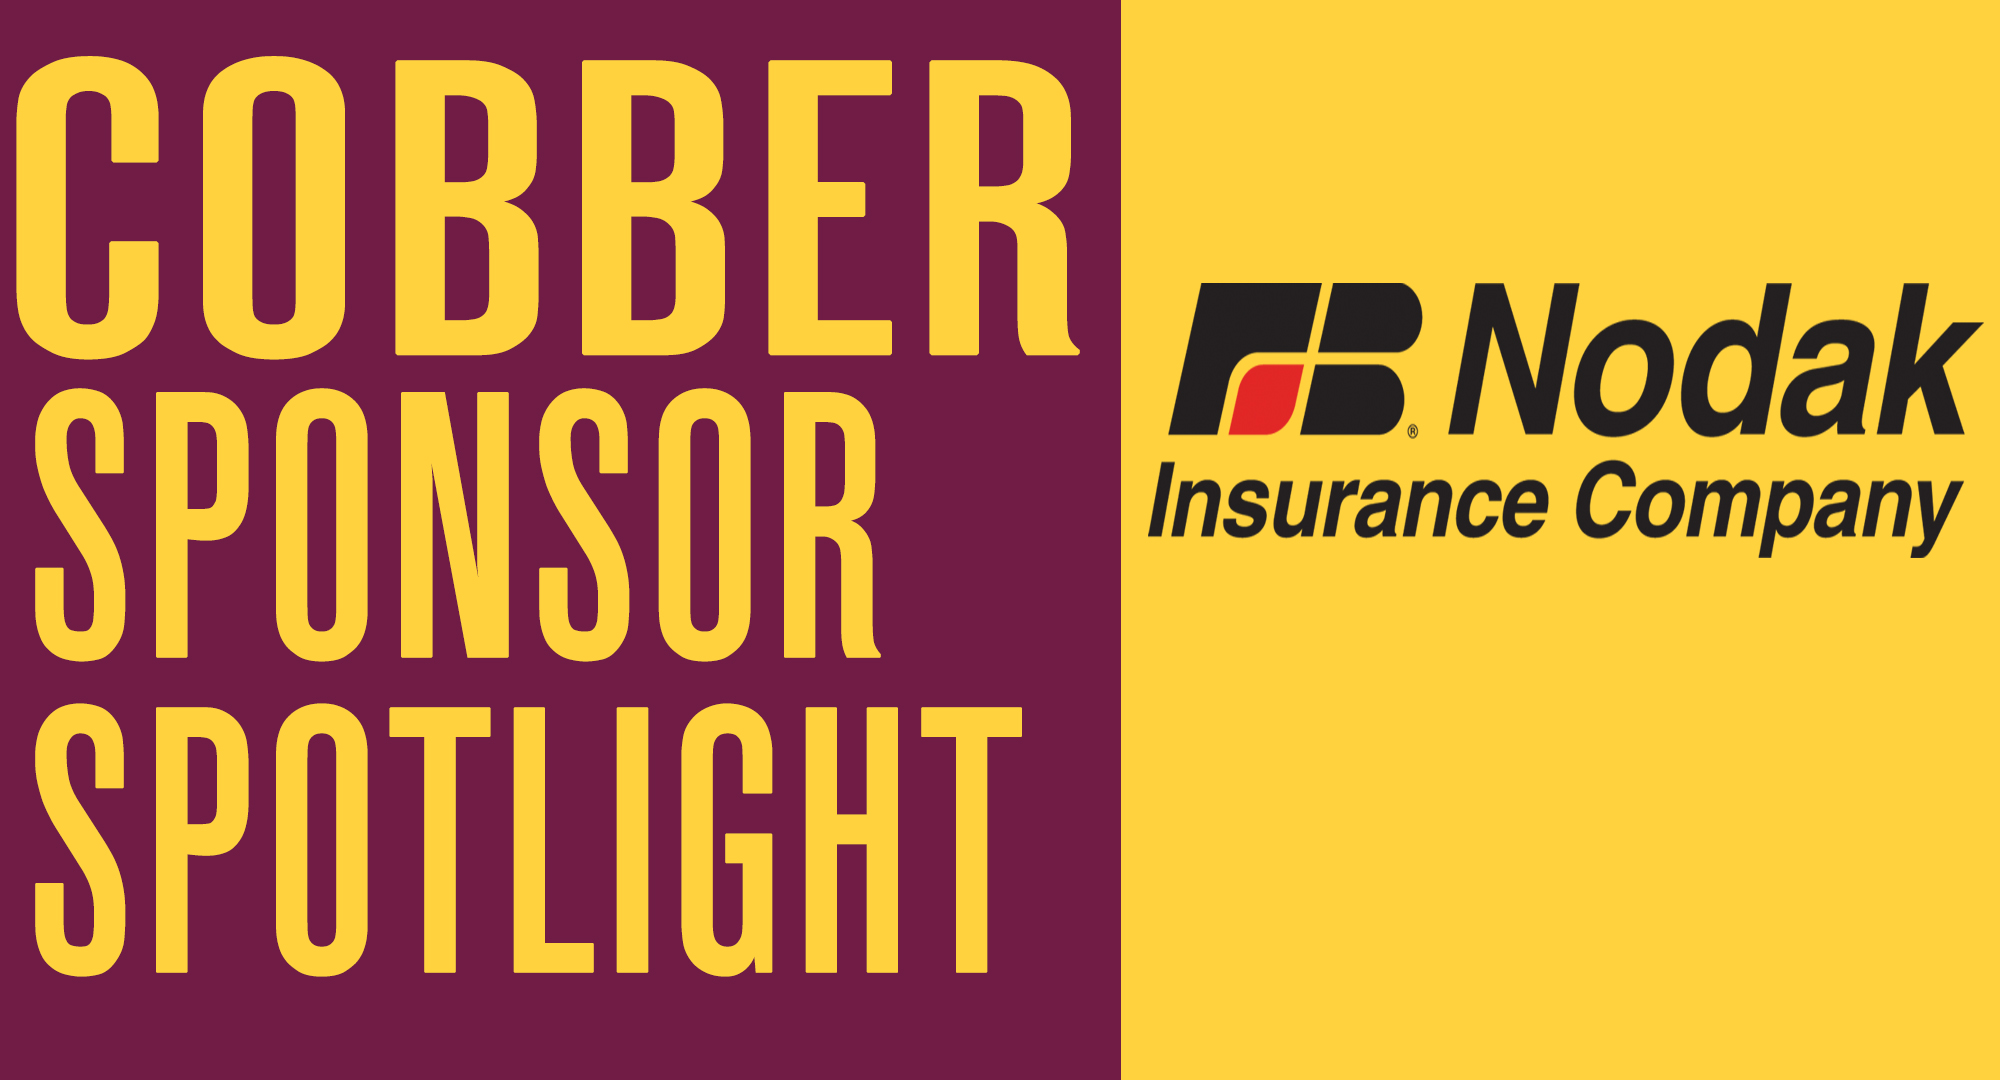 Cobber Sponsor Spotlight Nodak Insurance Company